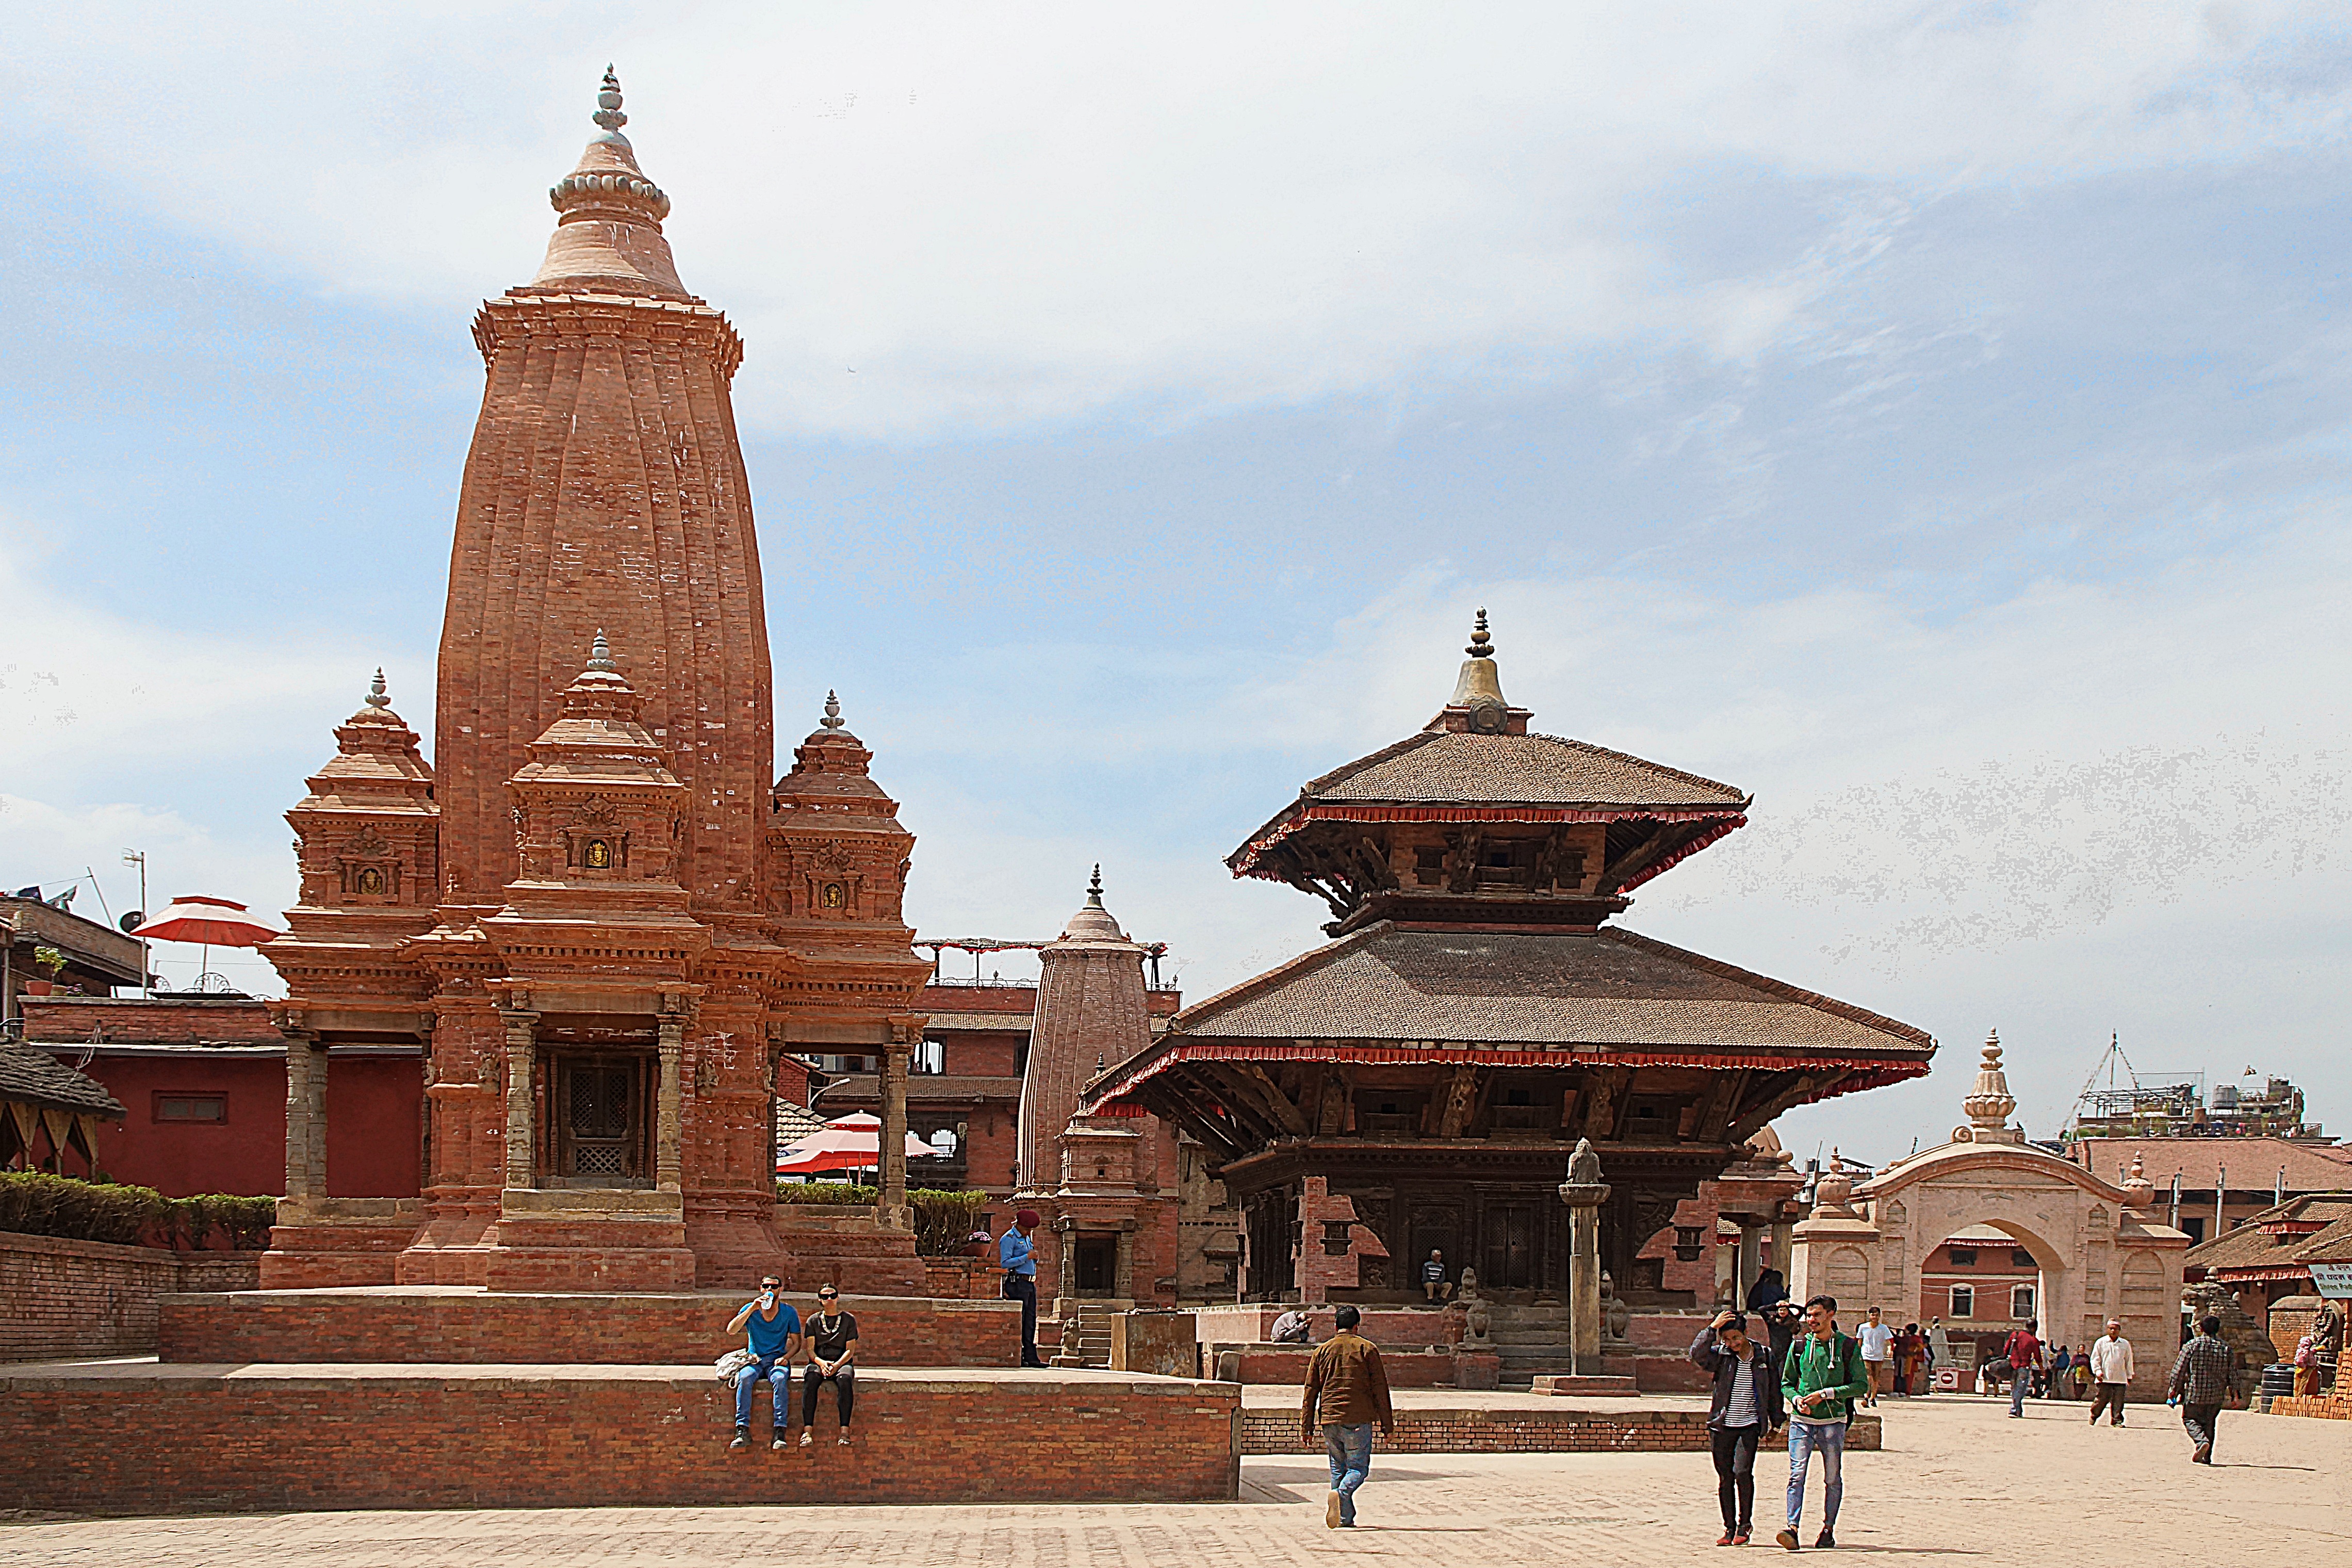 Два индуистских храма на пл. в Бхактапуре - слева в североиндийском стиле, справа - внепальском стиле Невари. Фото Морошкина В.В.